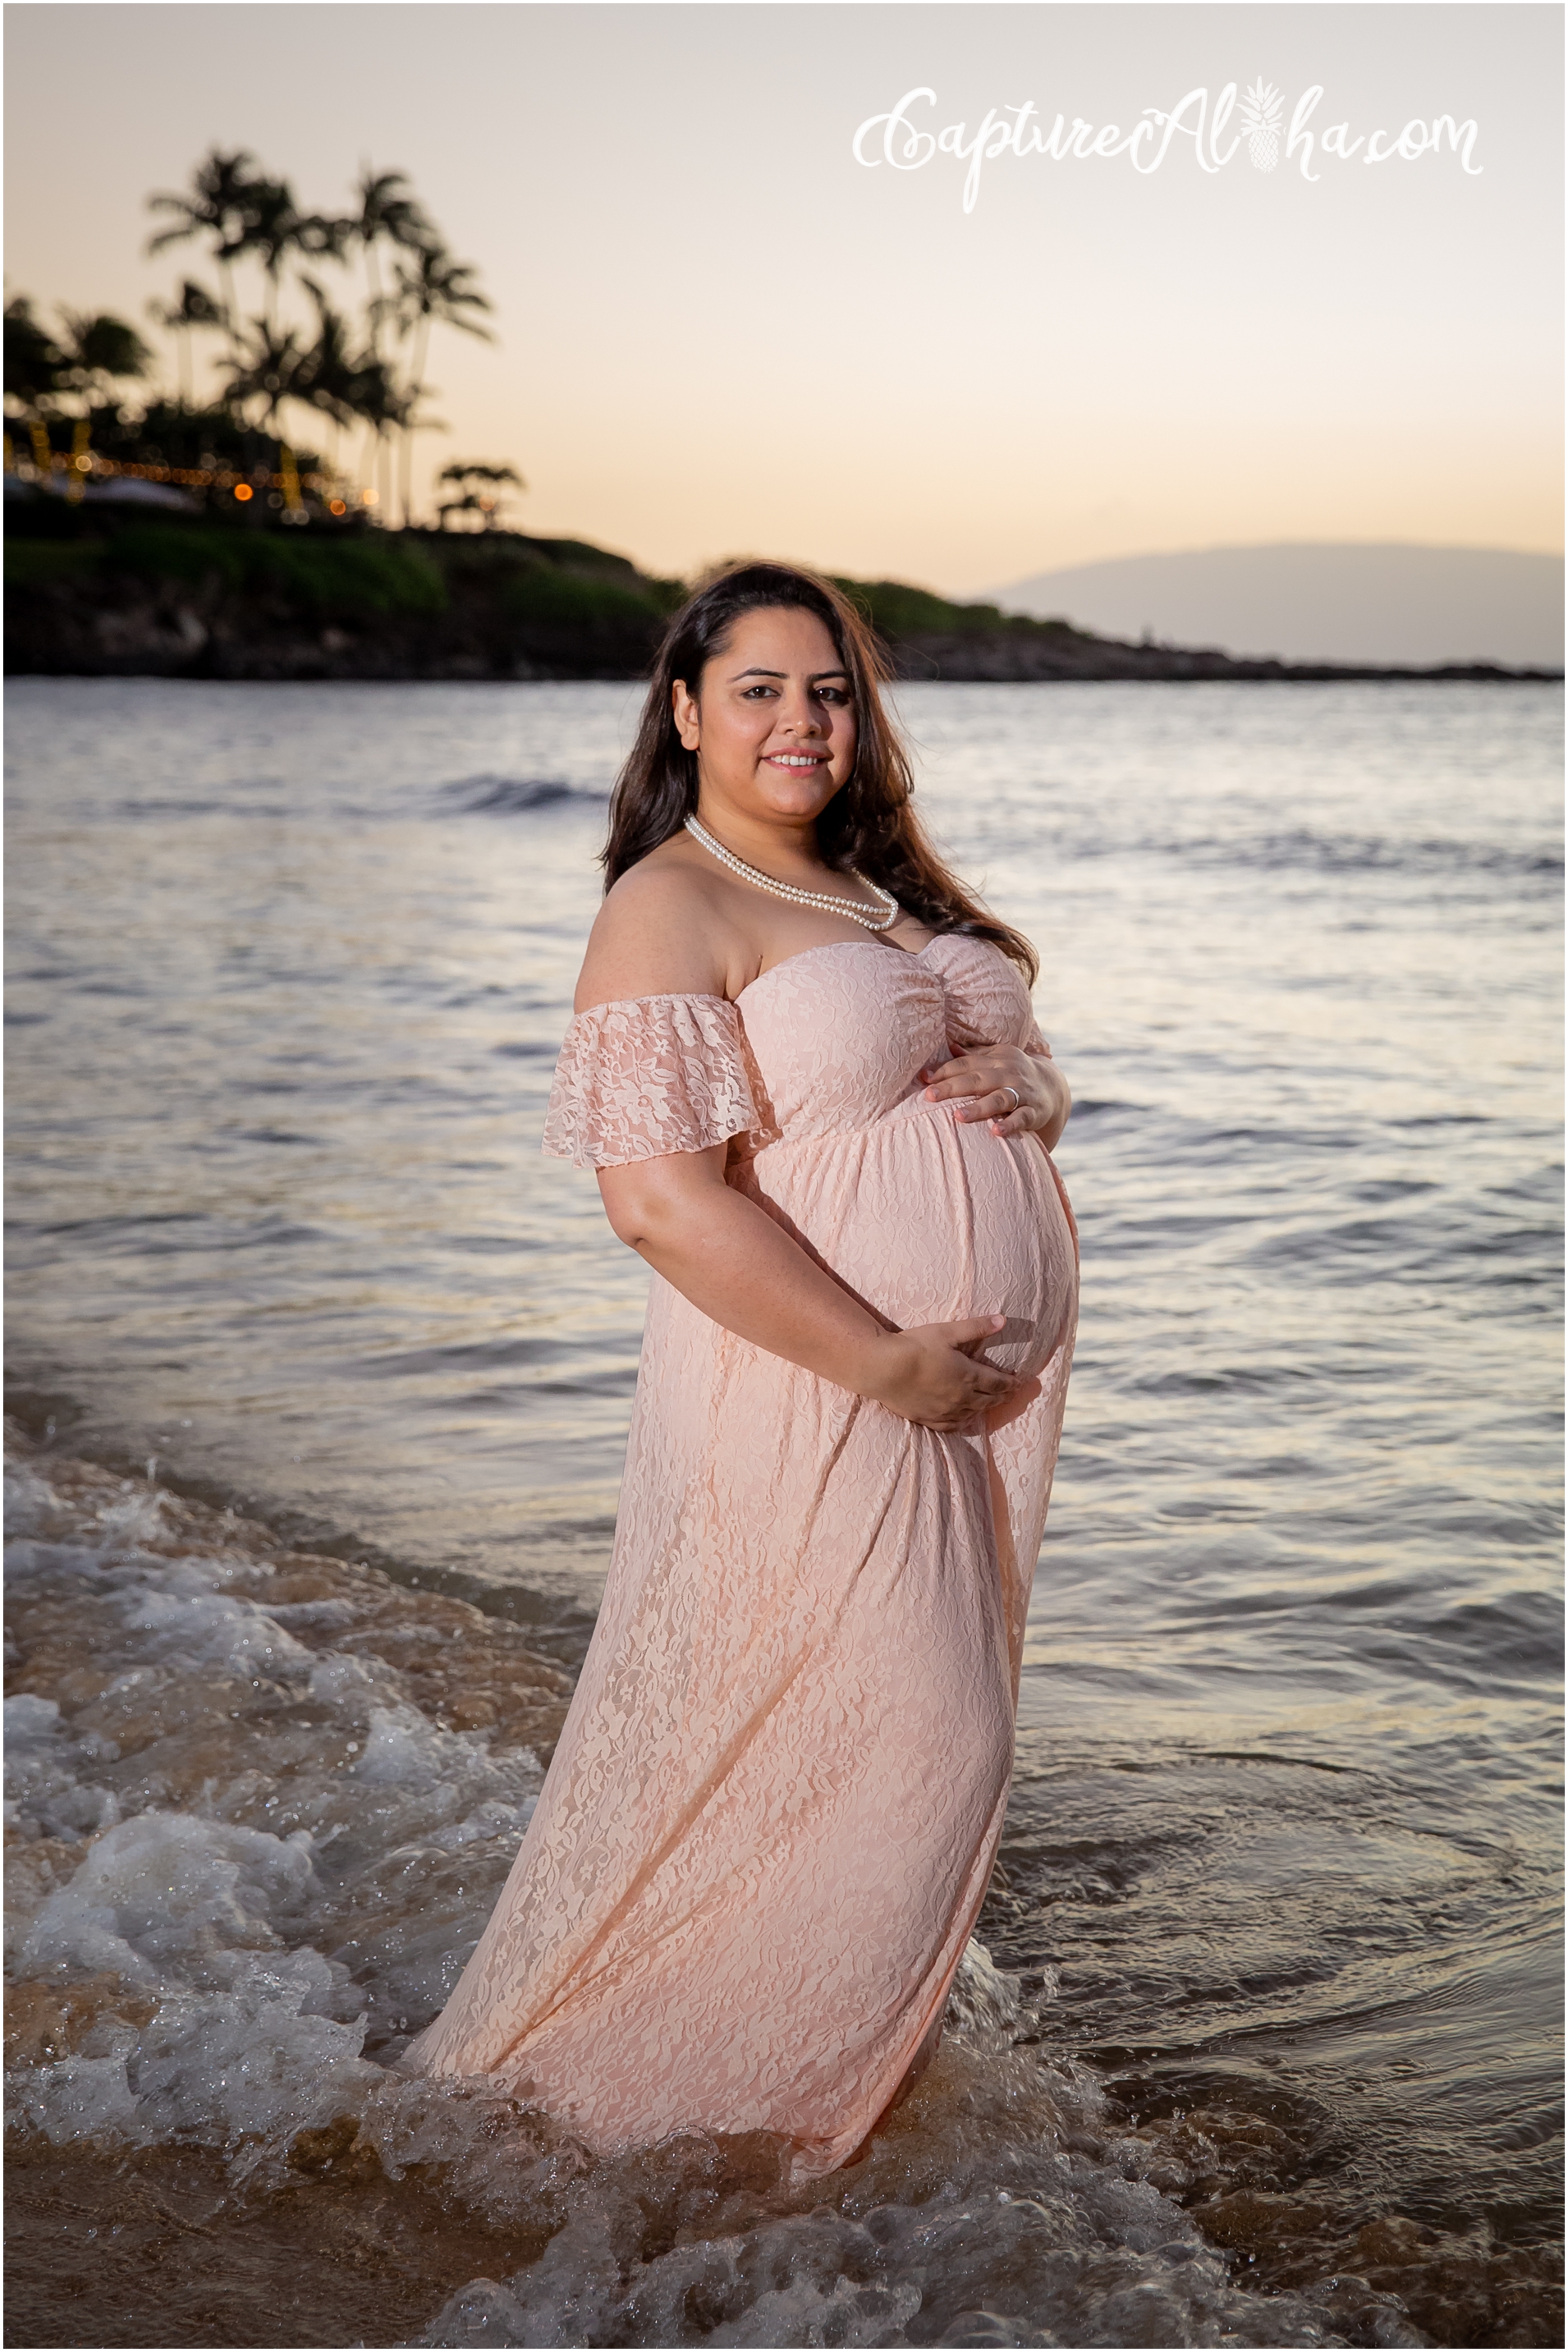 Maui Maternity Photographer at Kapalua Bay Beach at sunset